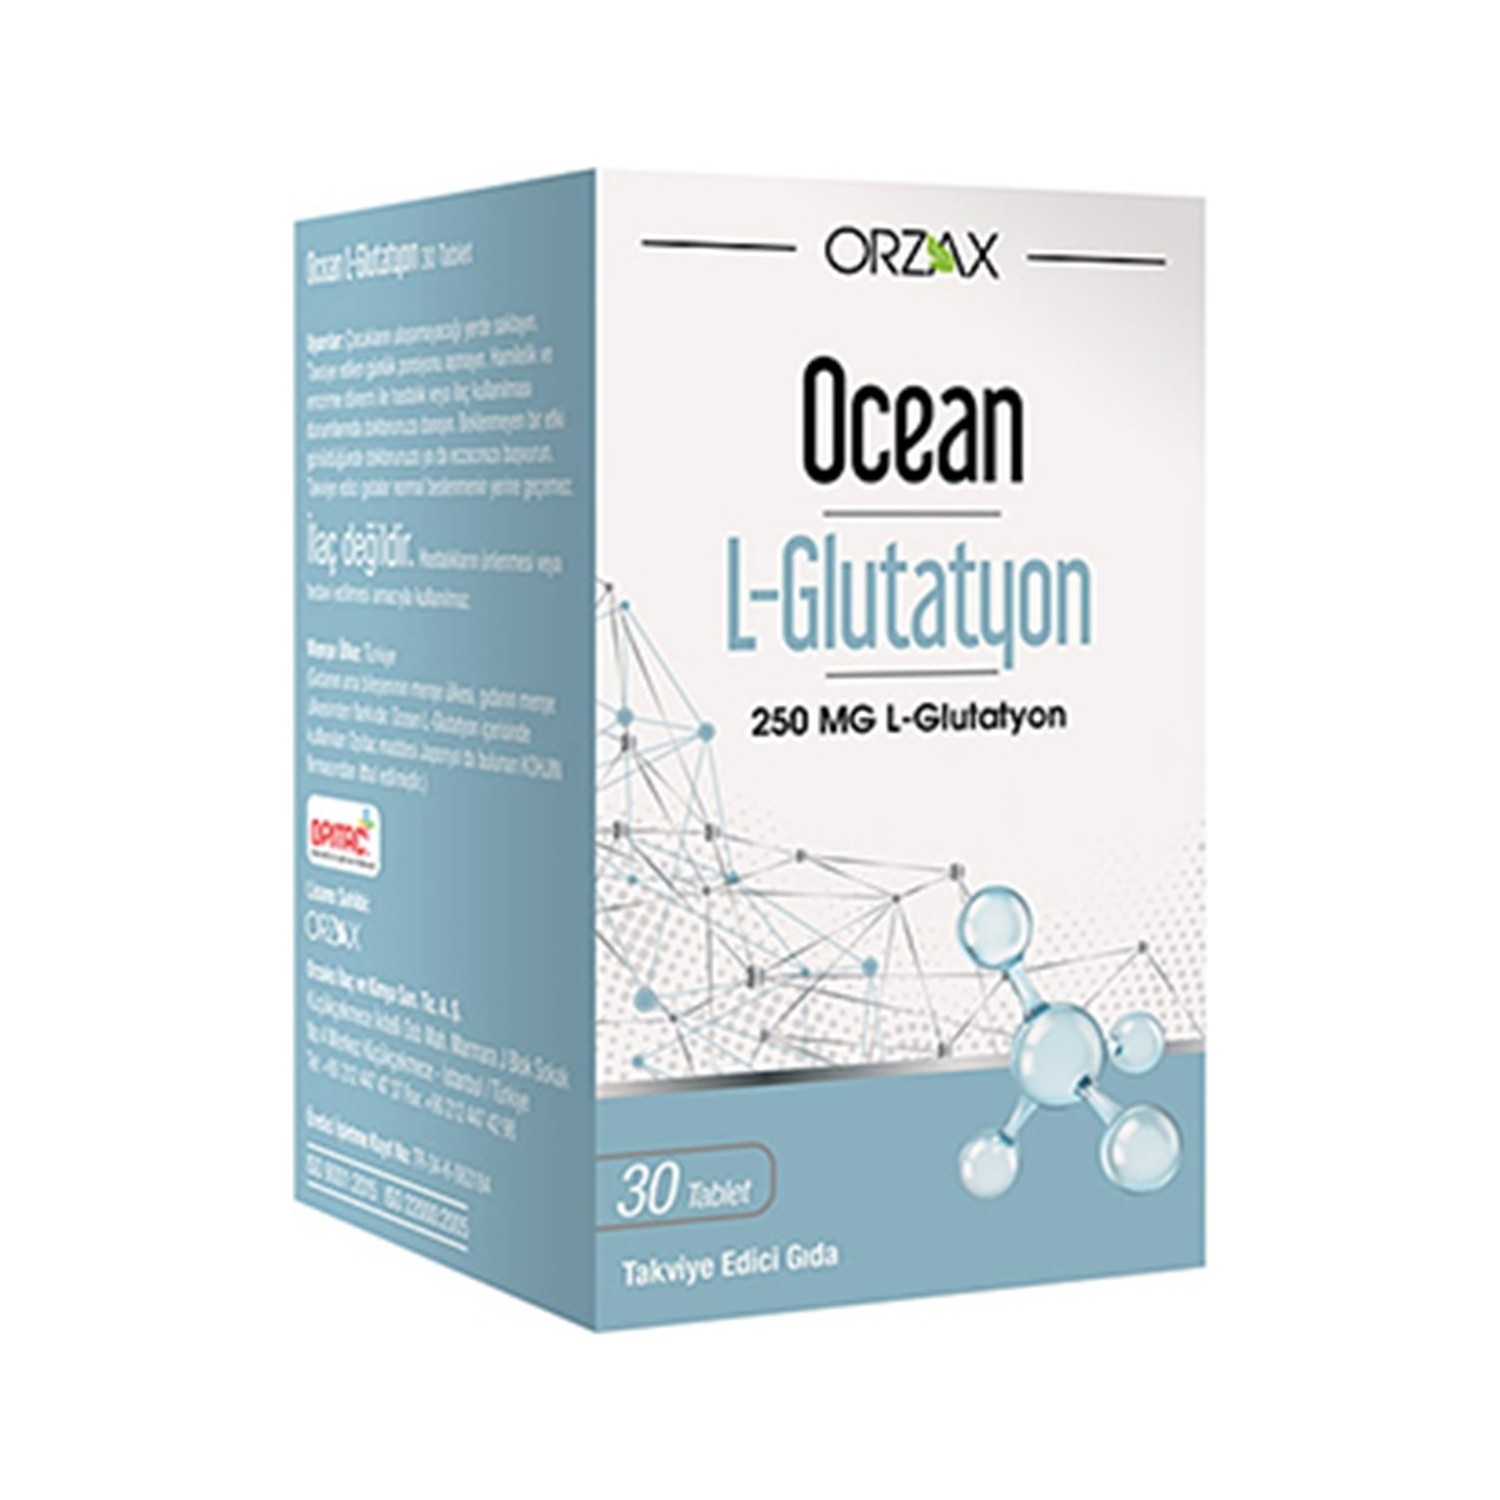 L-глутатион Ocean 250 мг, 30 таблеток l глутатион orzax ocean 250 мг 2 упаковки по 30 таблеток